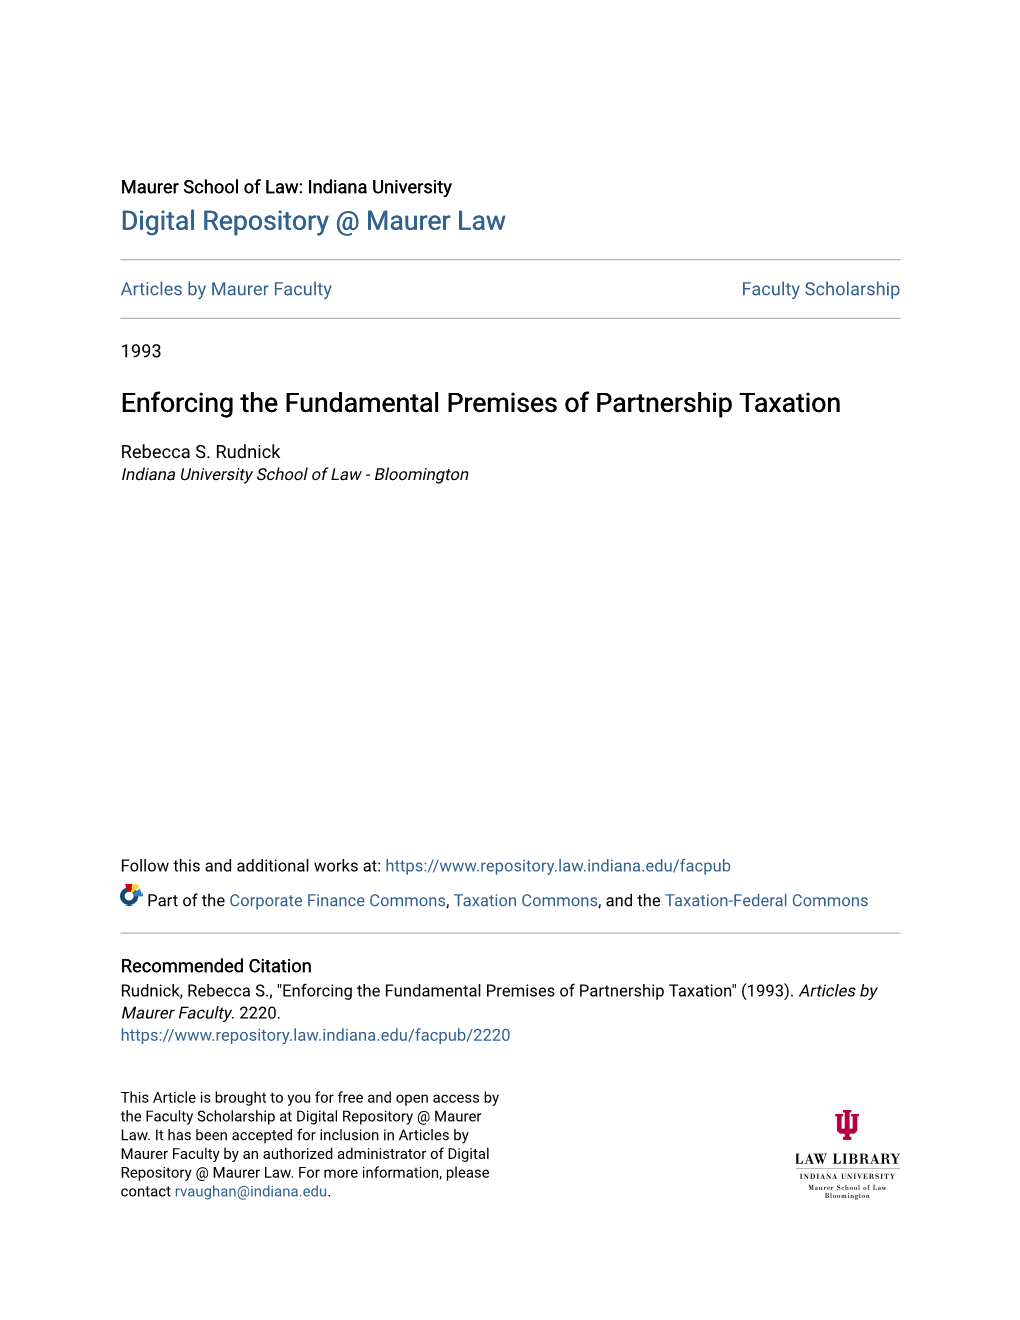 Enforcing the Fundamental Premises of Partnership Taxation